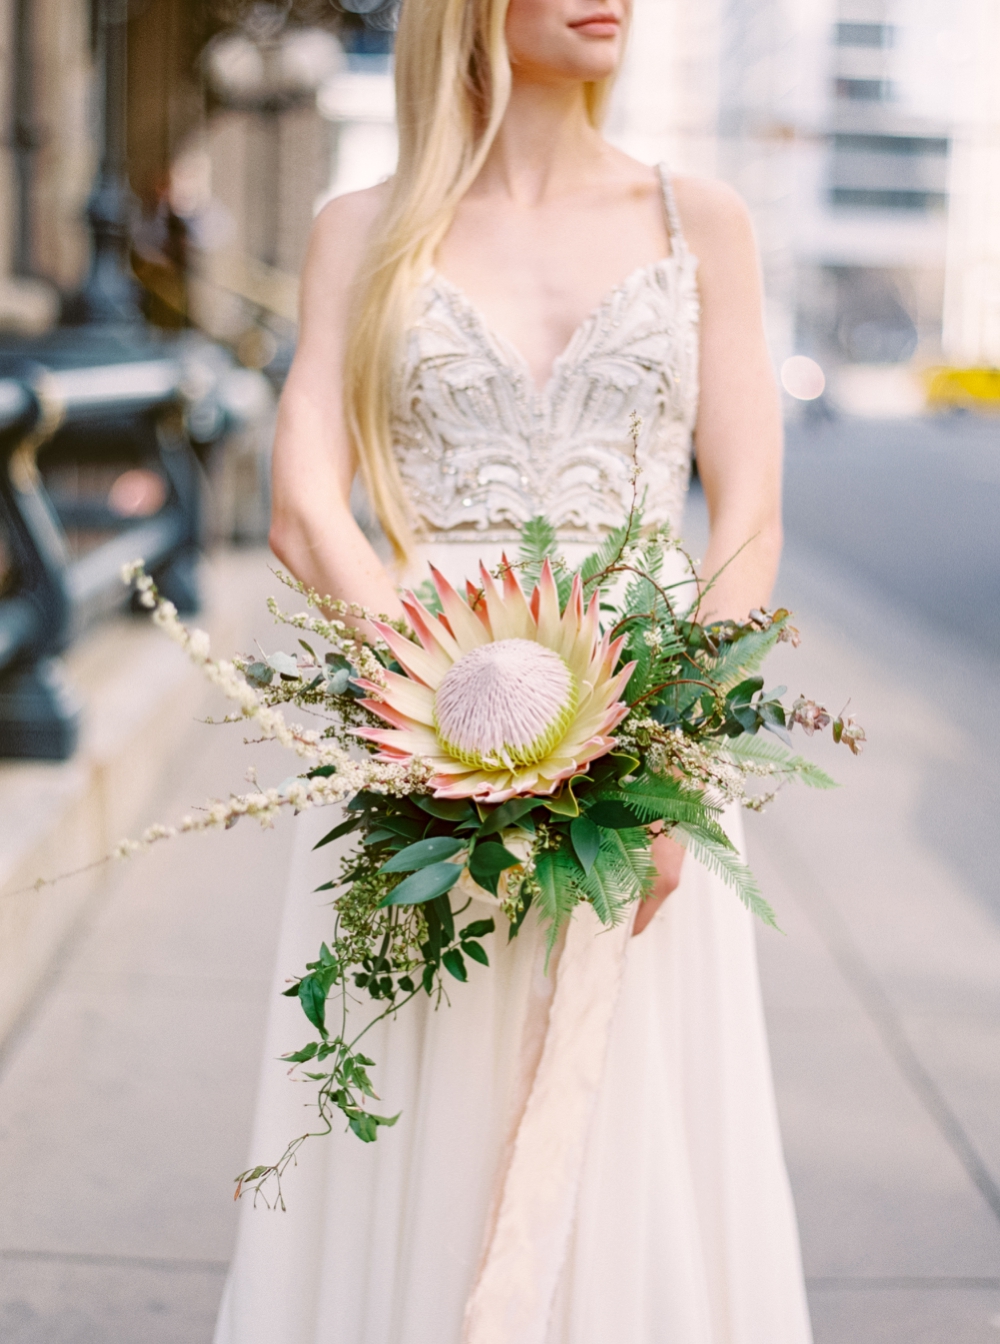 Bridal Editorial | Calgary Bridal Boutique | Hayley Paige Trunk Show | Calgary Wedding Photographers